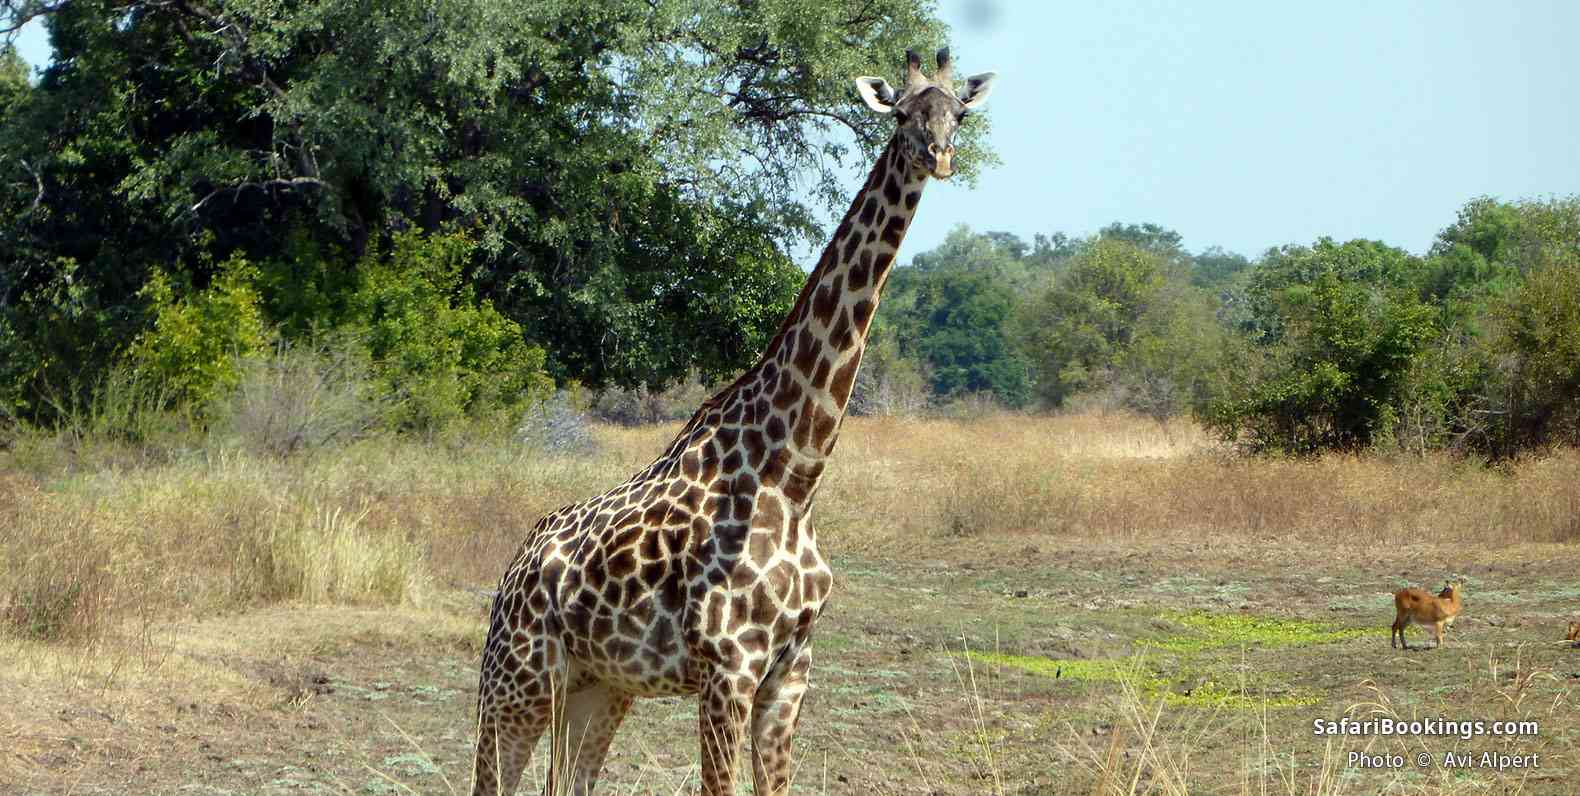 Thornicroft's Giraffe in Luangwa